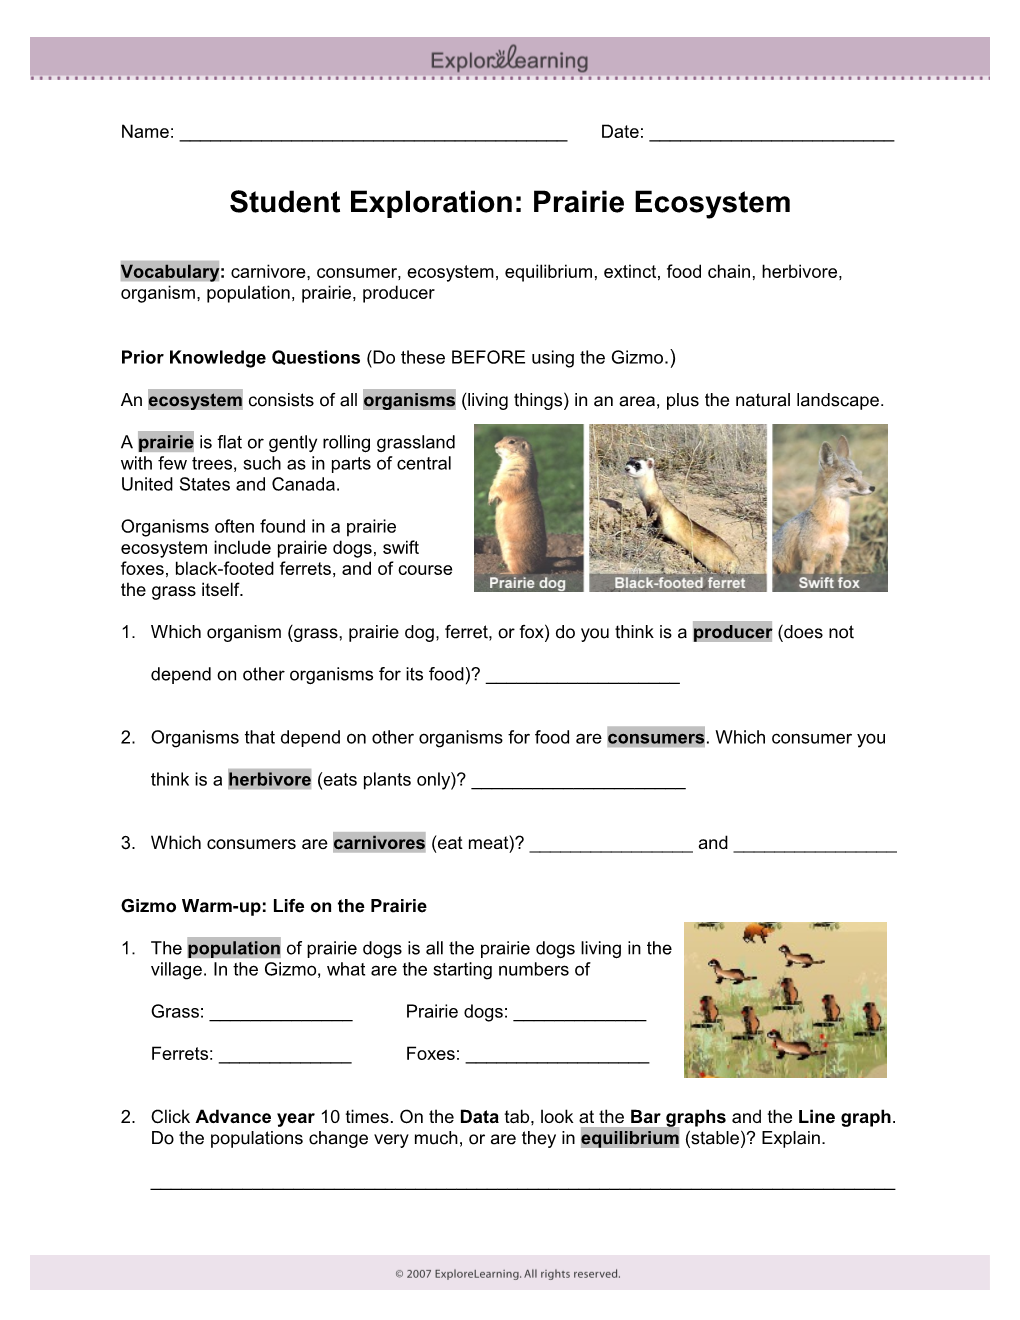 Student Exploration Sheet: Growing Plants s14